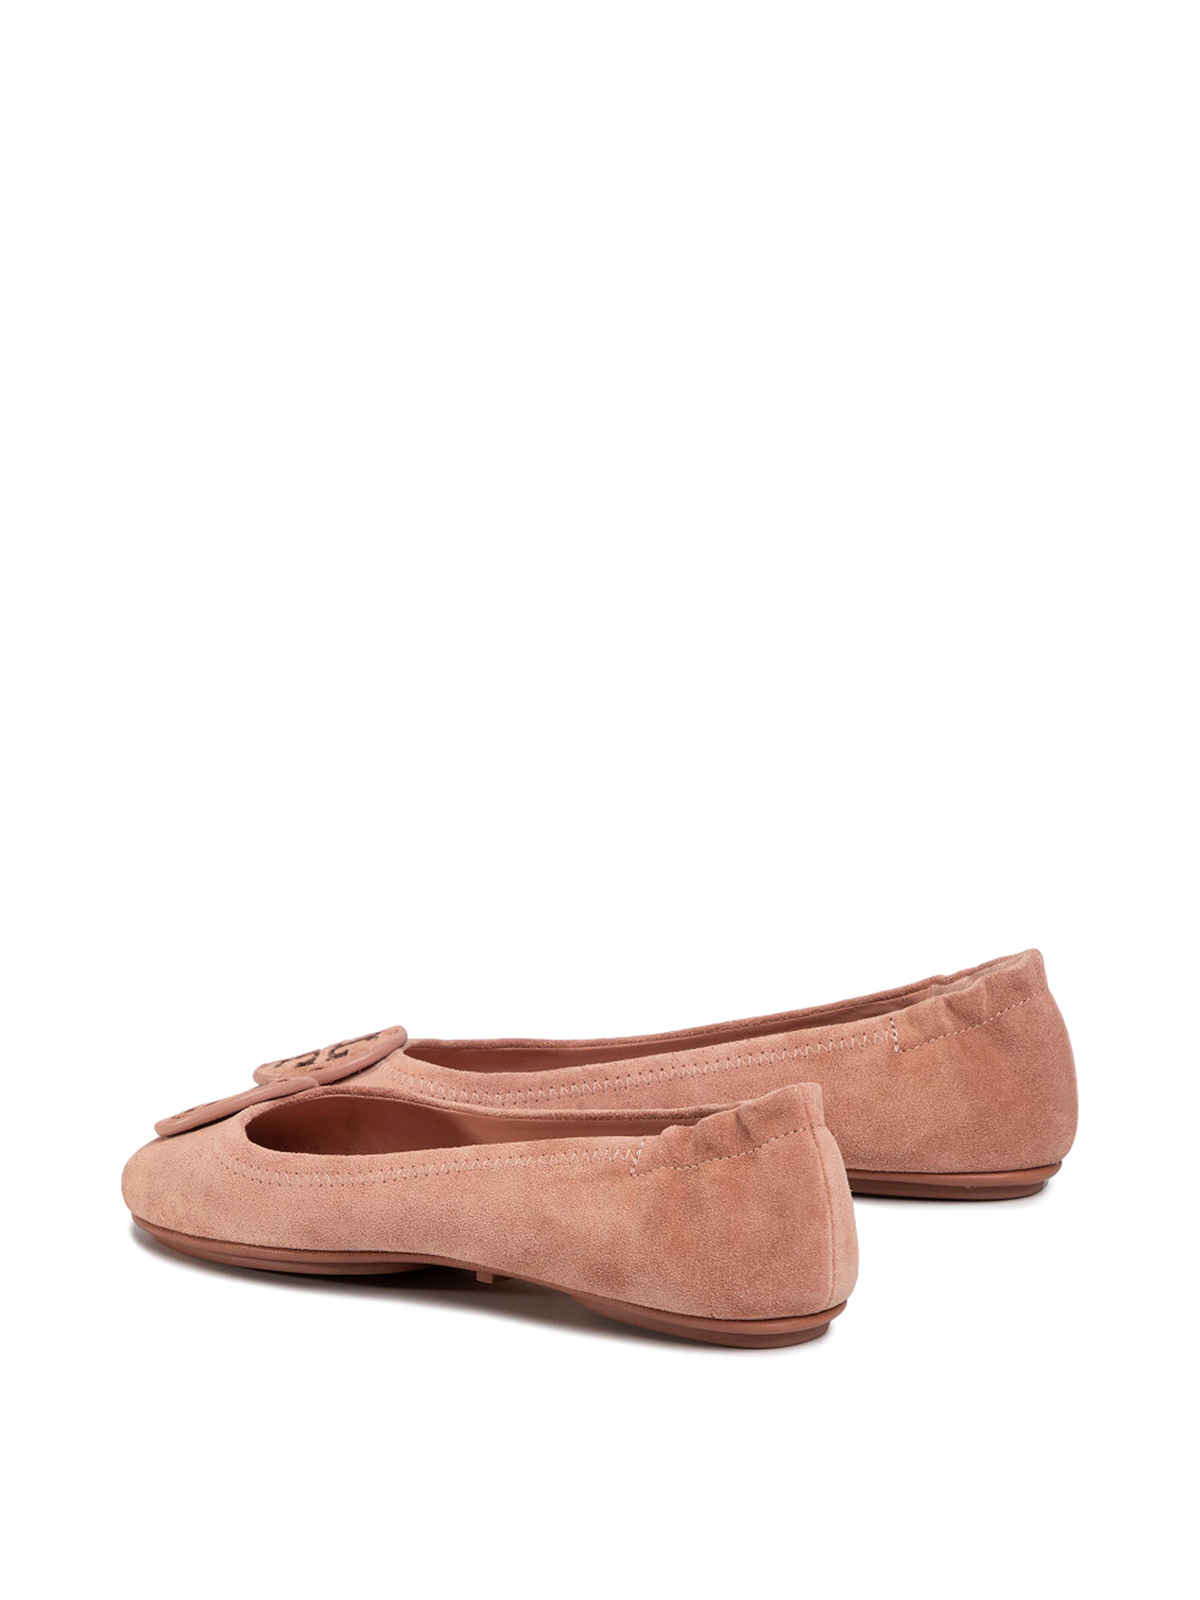 Flat shoes Tory Burch - Minnie flats - 57247667 | Shop online at iKRIX